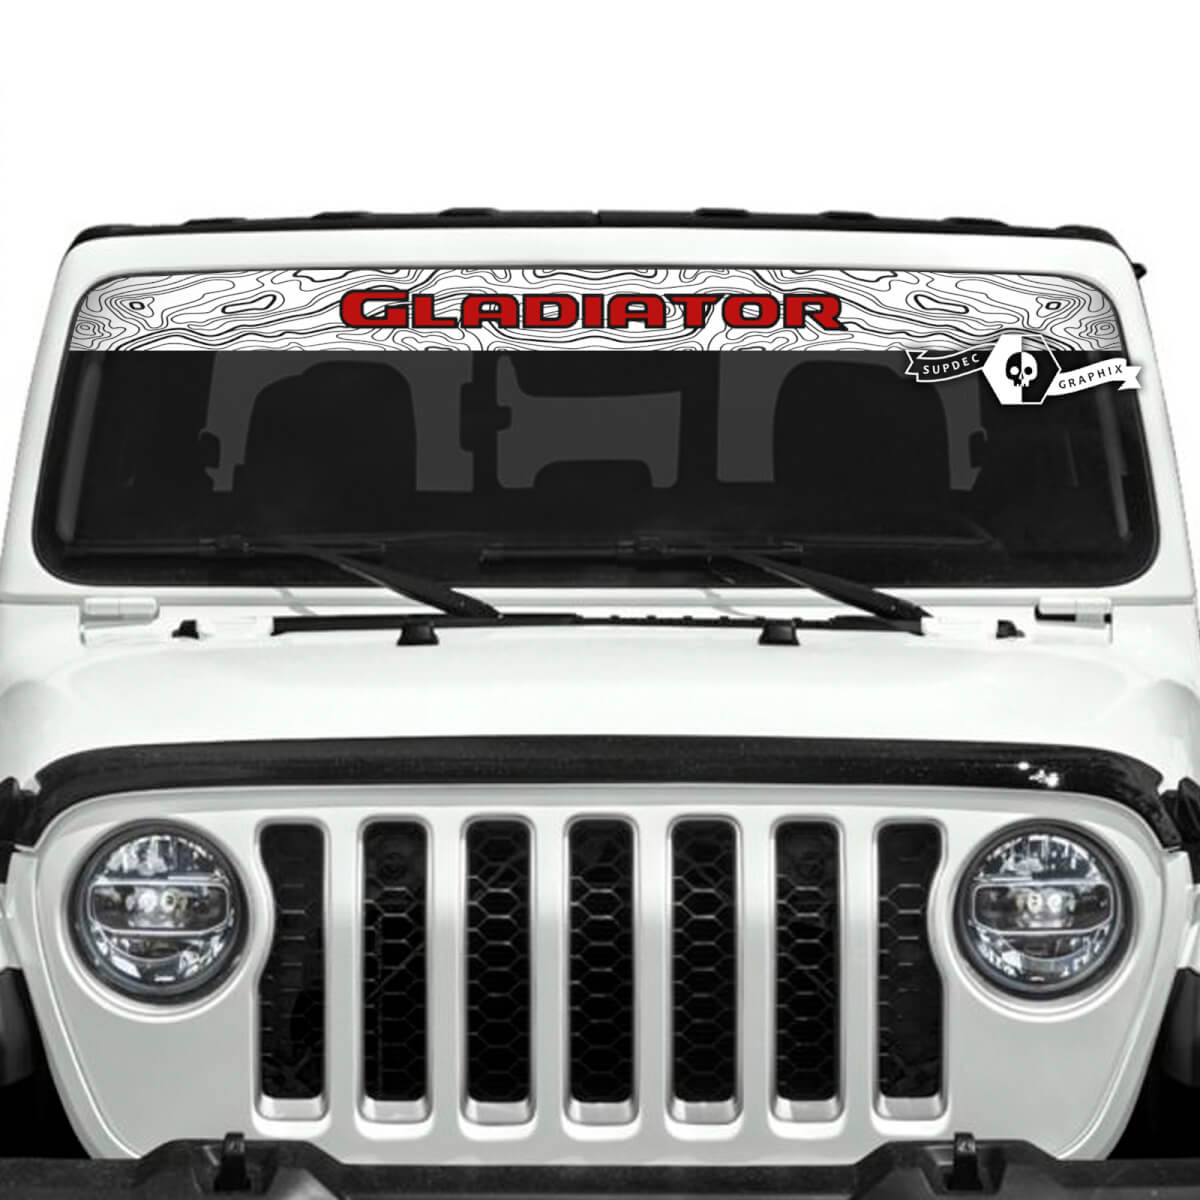 Jeep Gladiator voorruit logo stickers vinyl graphics
